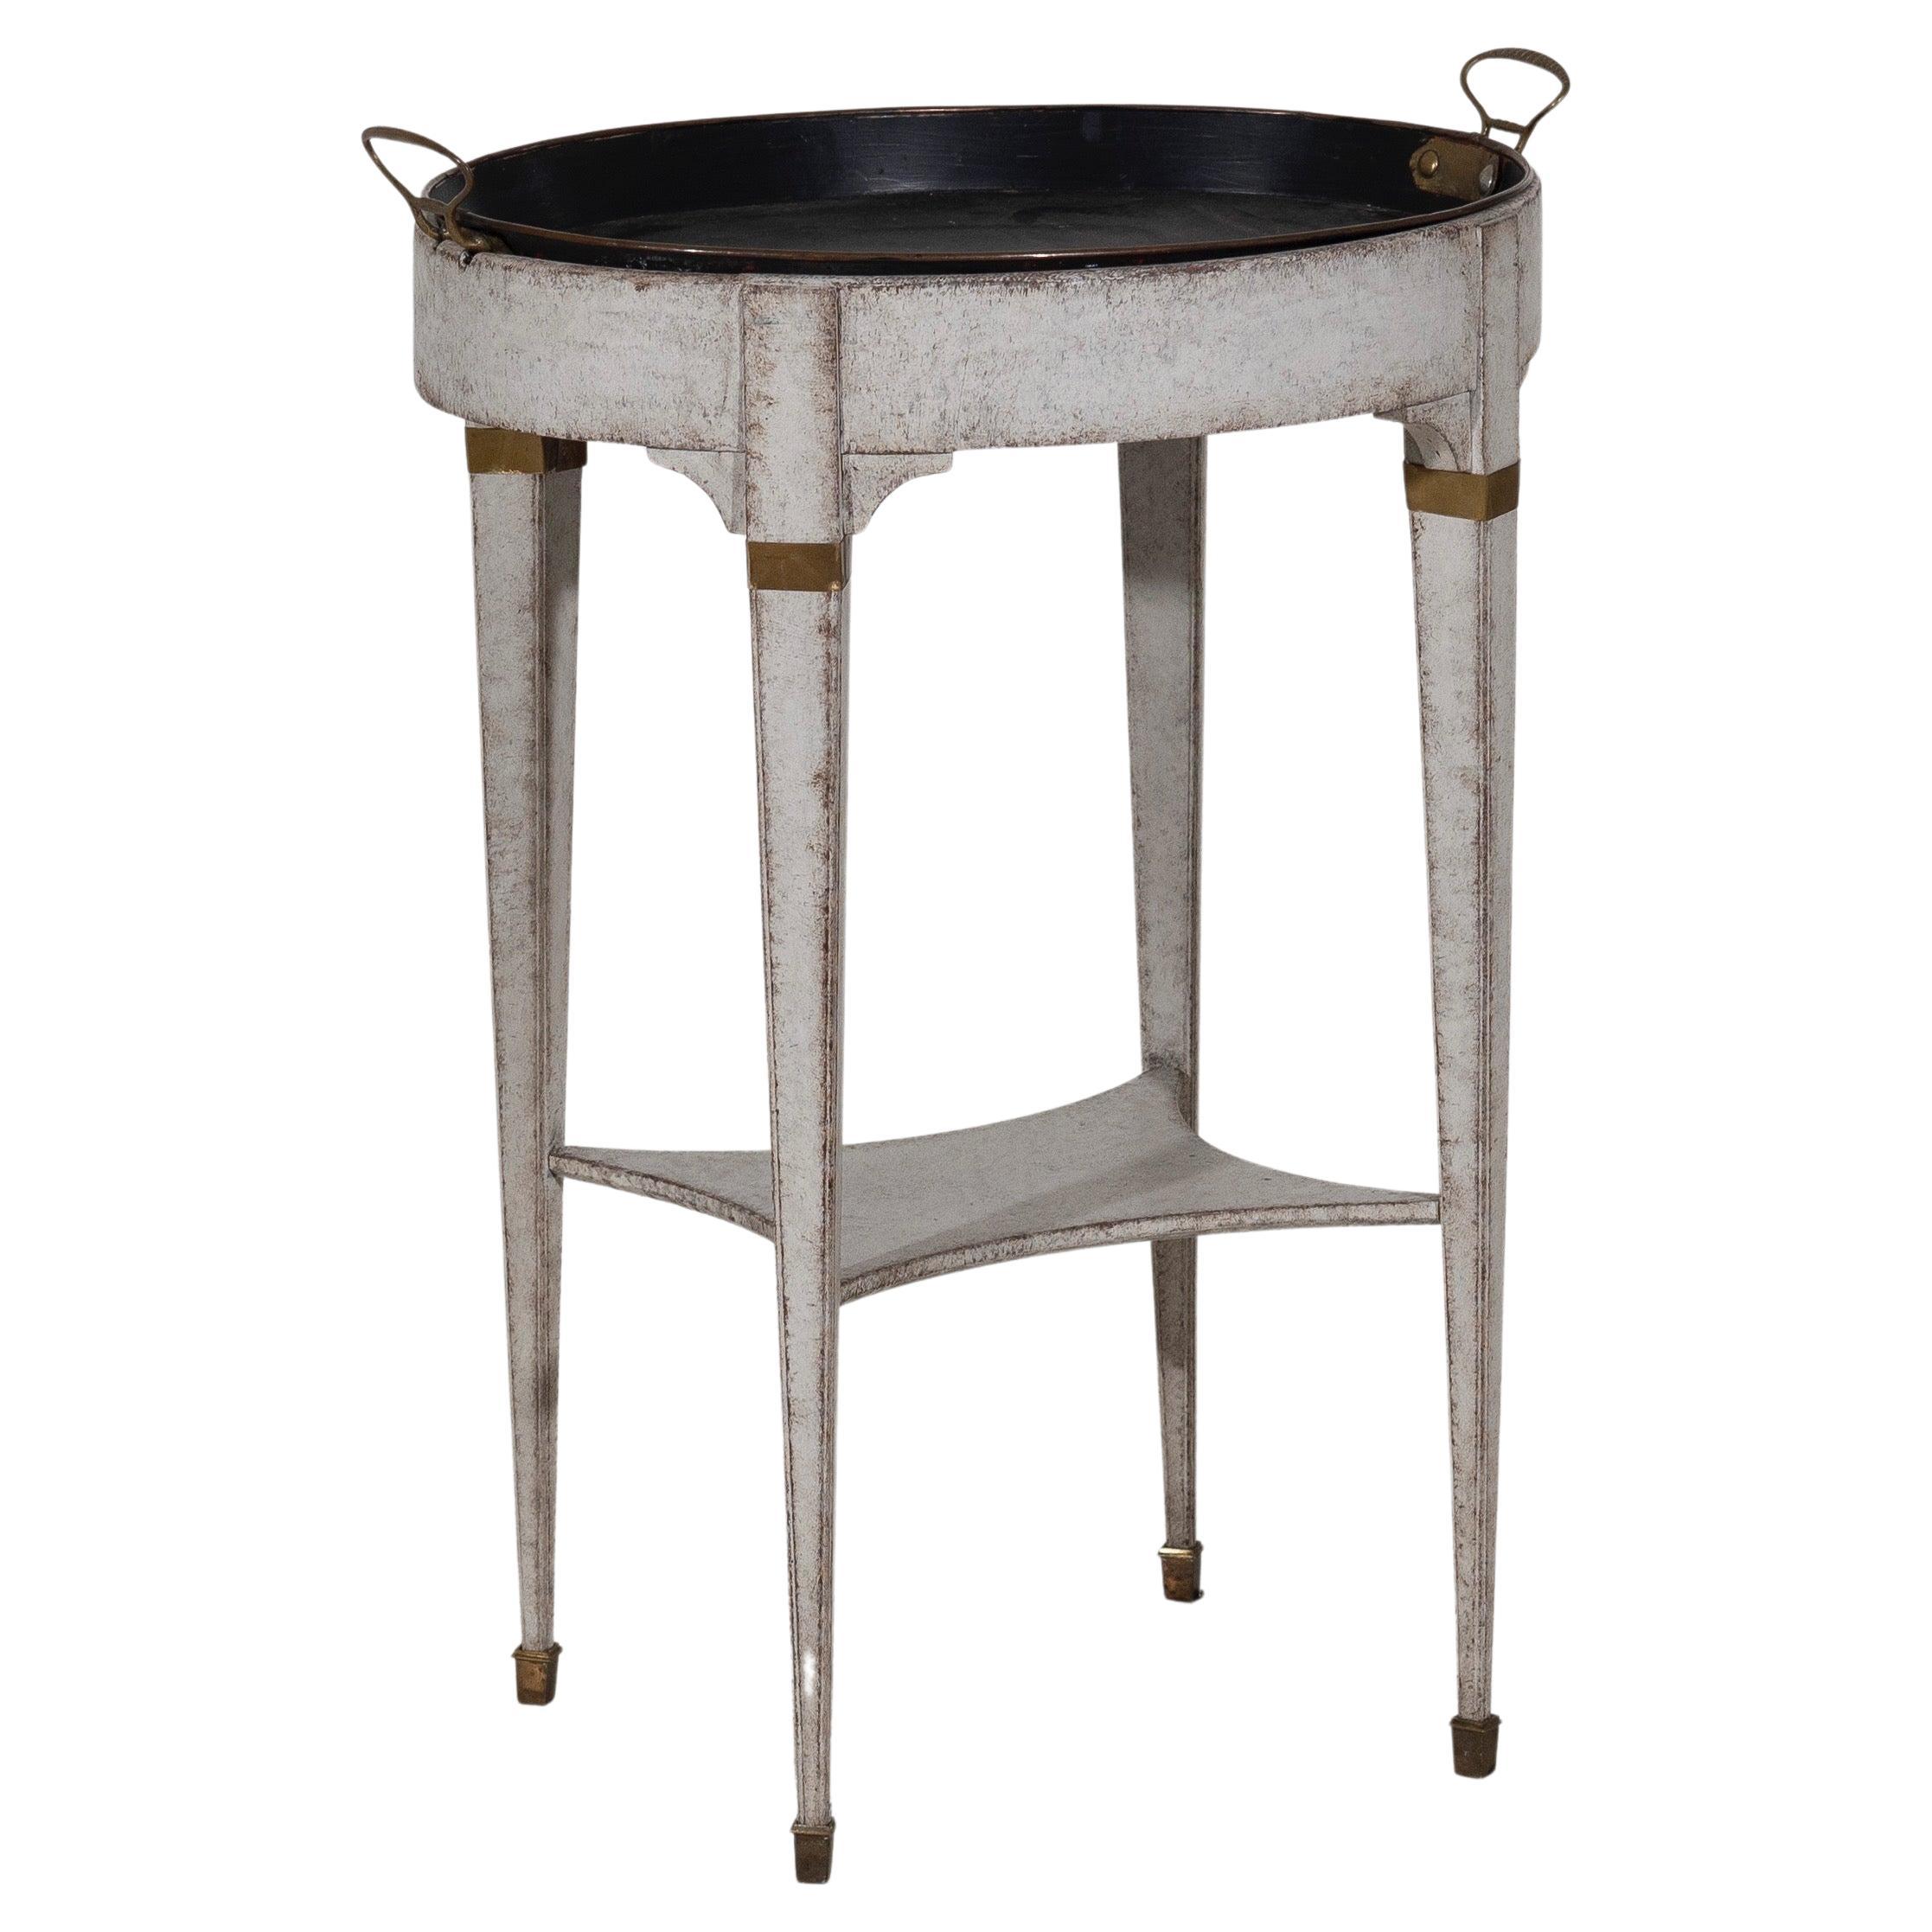 Trey-top table, freestanding, and with original metal trey. Swedish, circa 1810